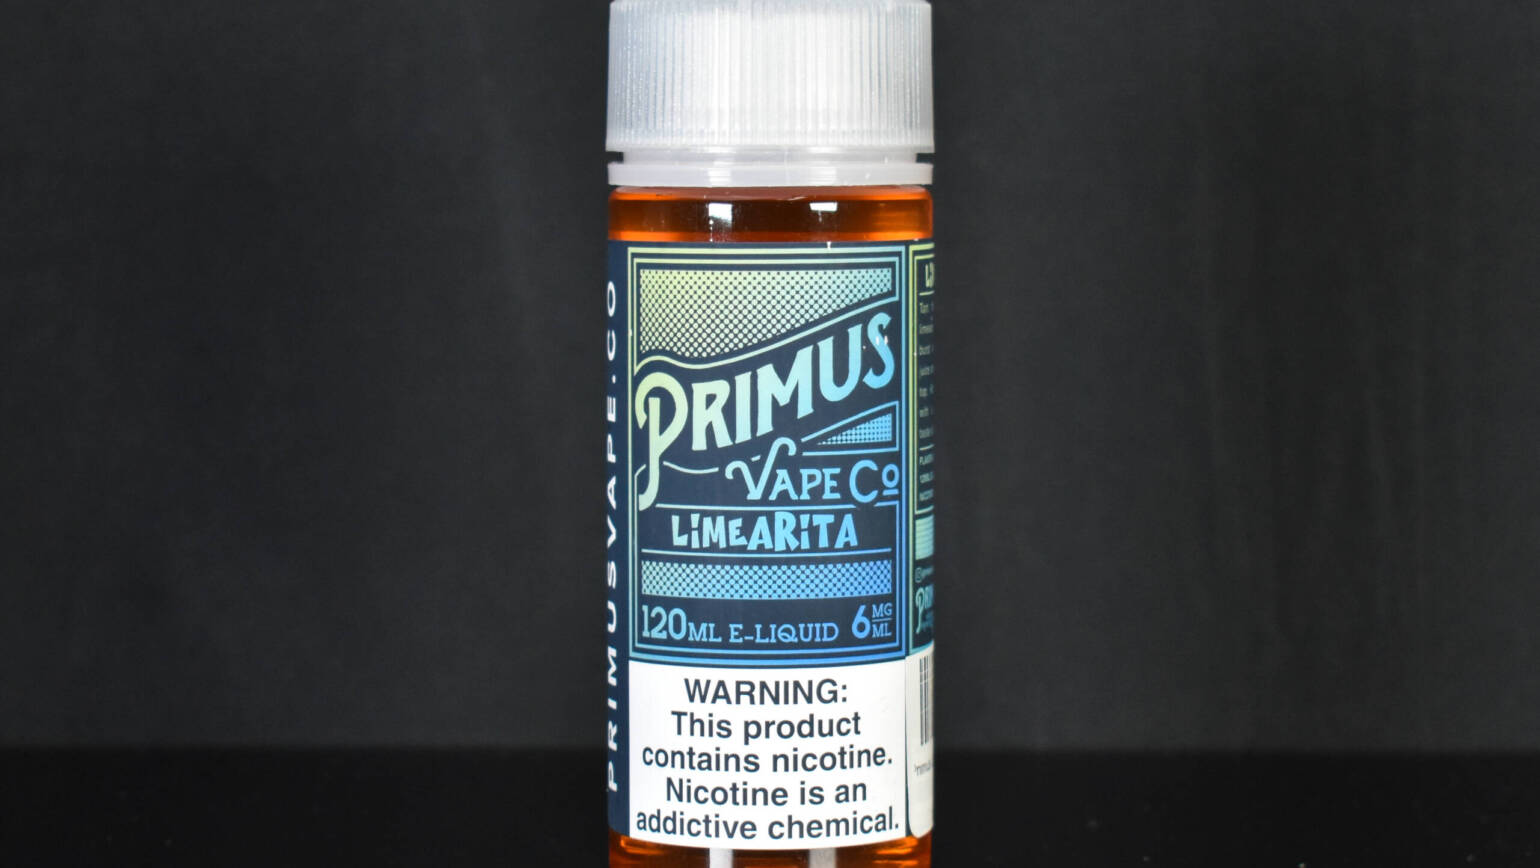 Primus Vape Co – Limearita